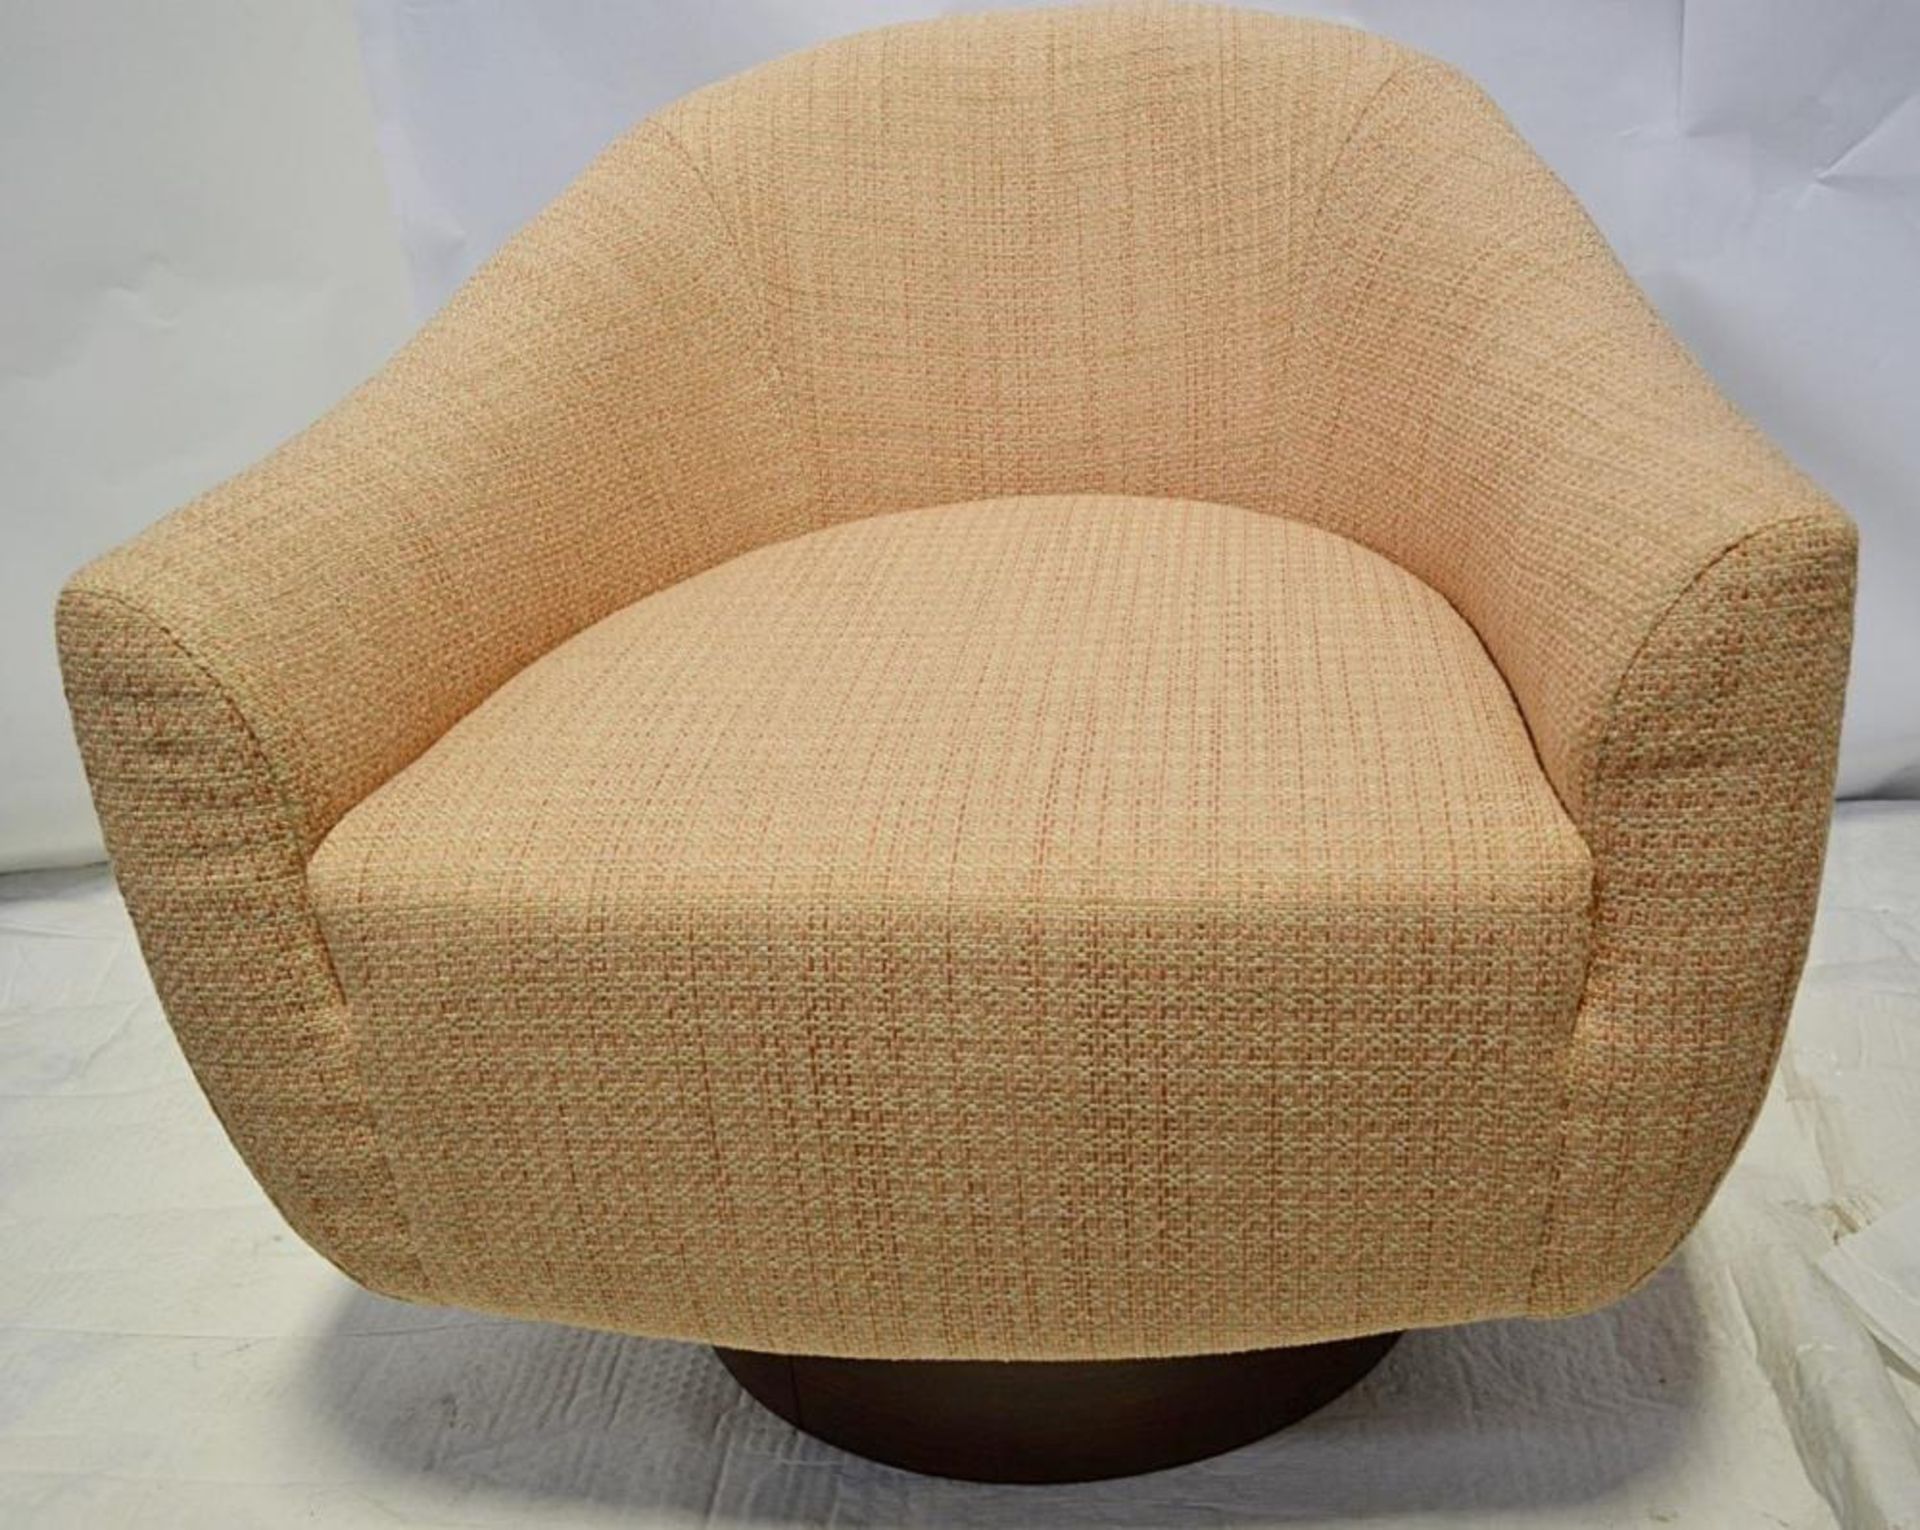 1 x KELLY WEARSTLER Sonara Swivel Chair Rosewood - Dimensions: 31” W x 35” D x 31” H - Ex-Display In - Image 18 of 28